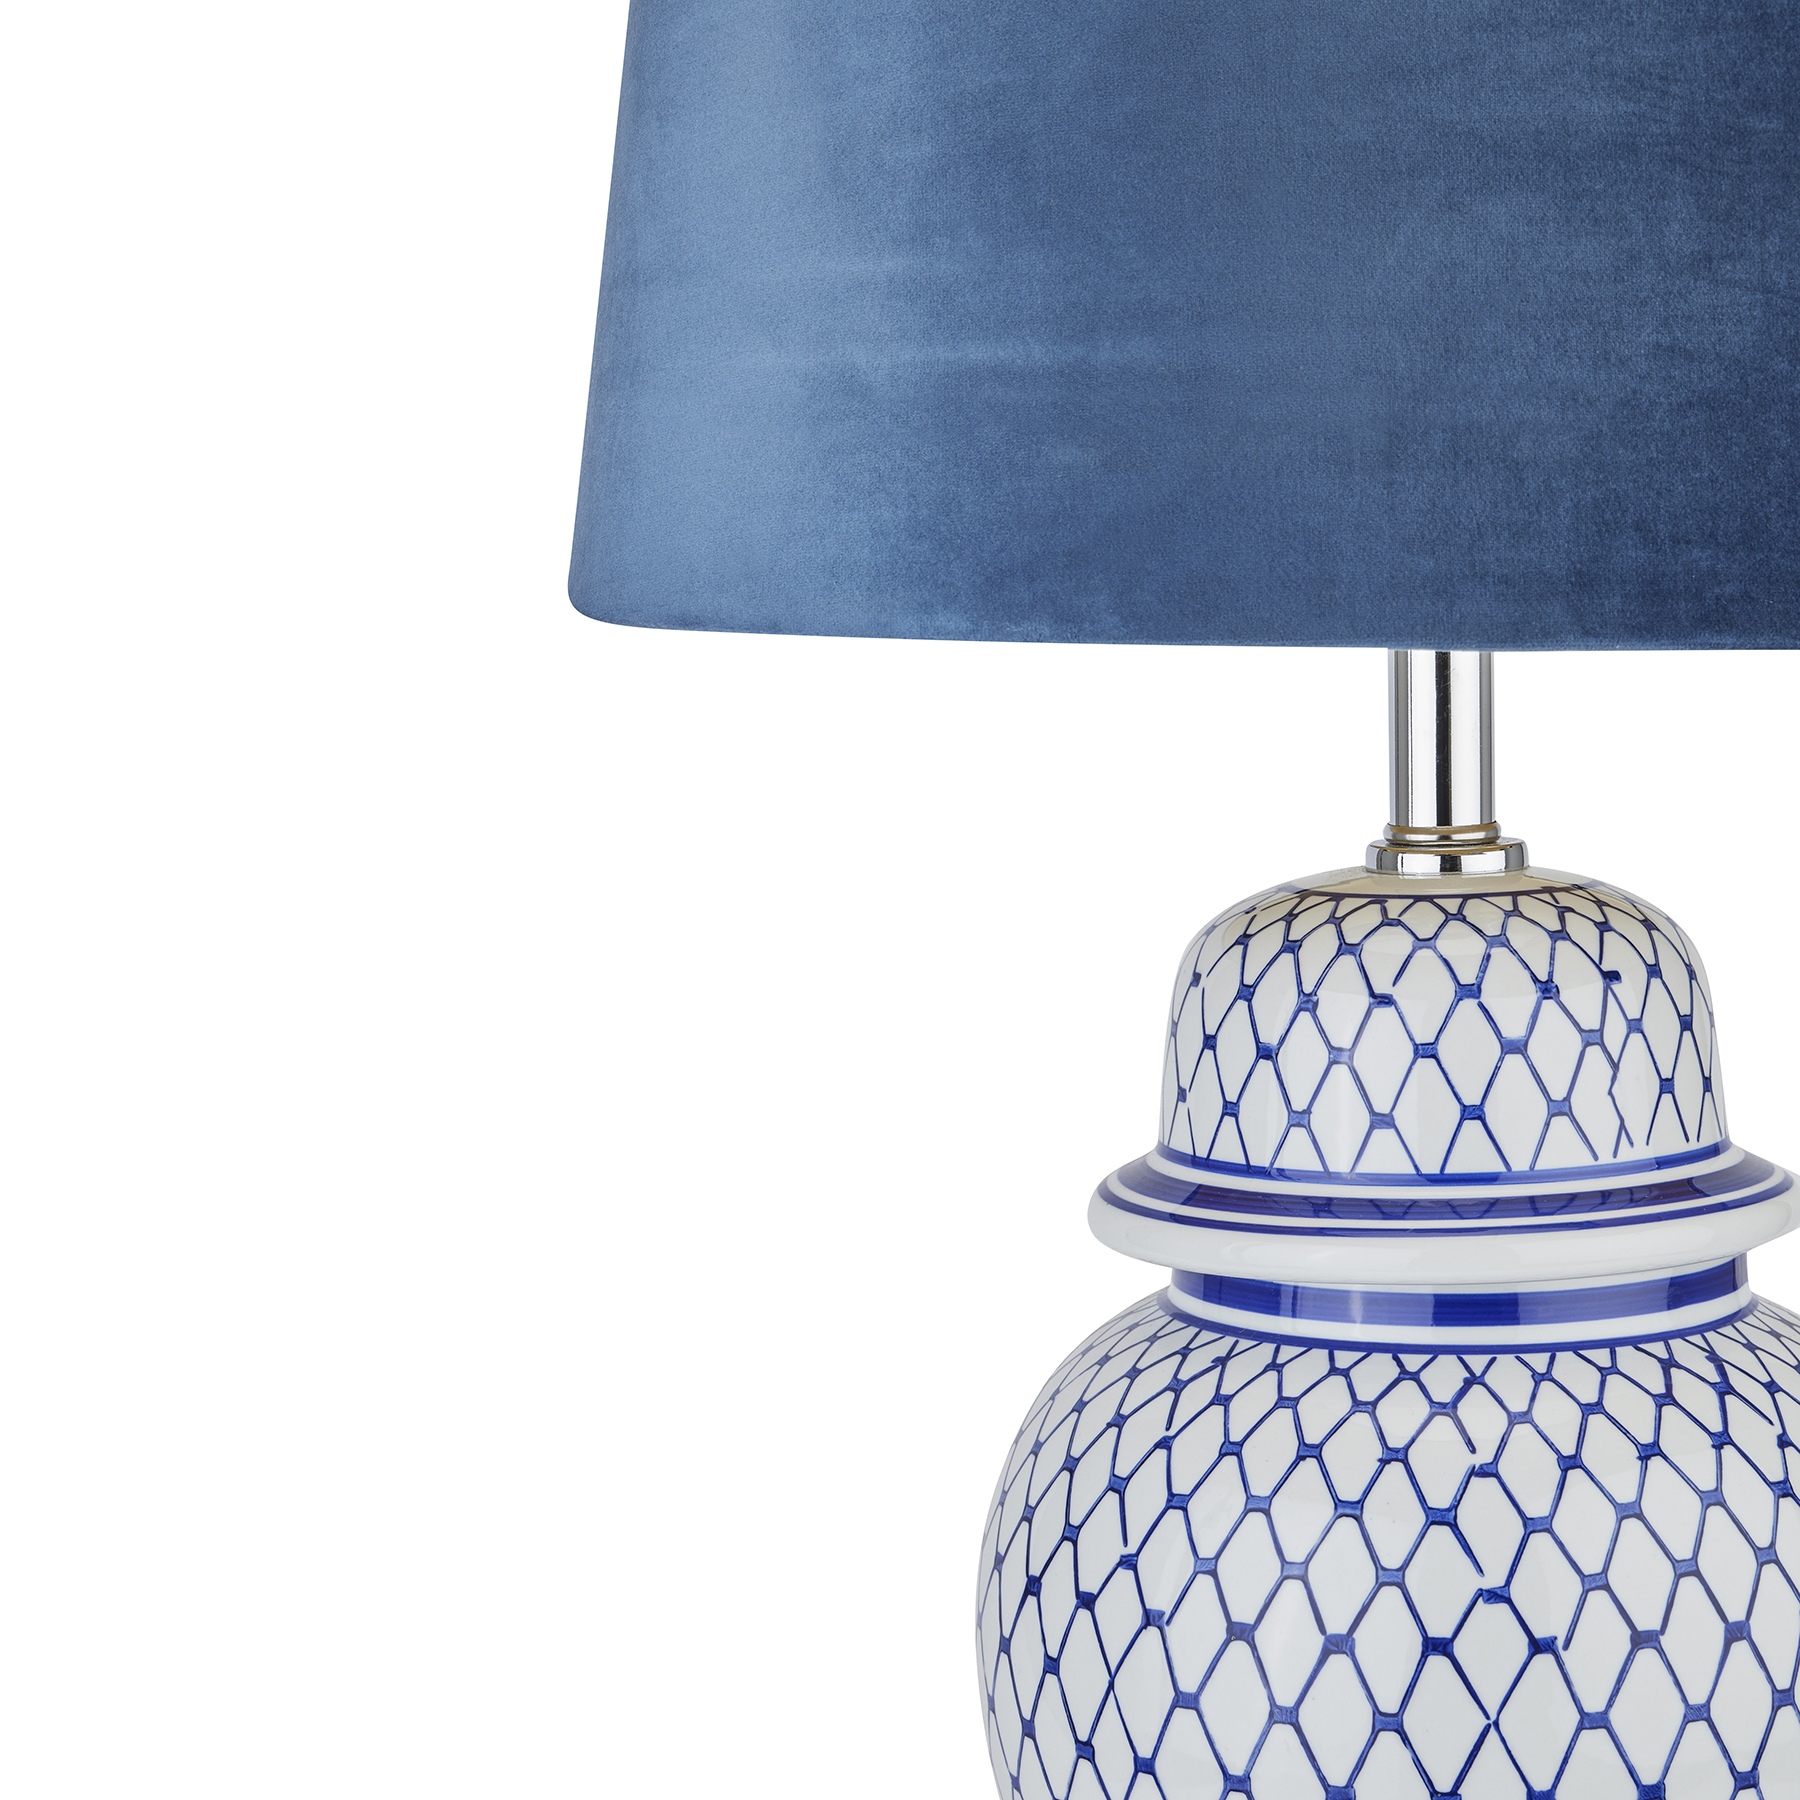 Malabar Blue And White Ceramic Lamp With Blue Velvet Shade - Image 2